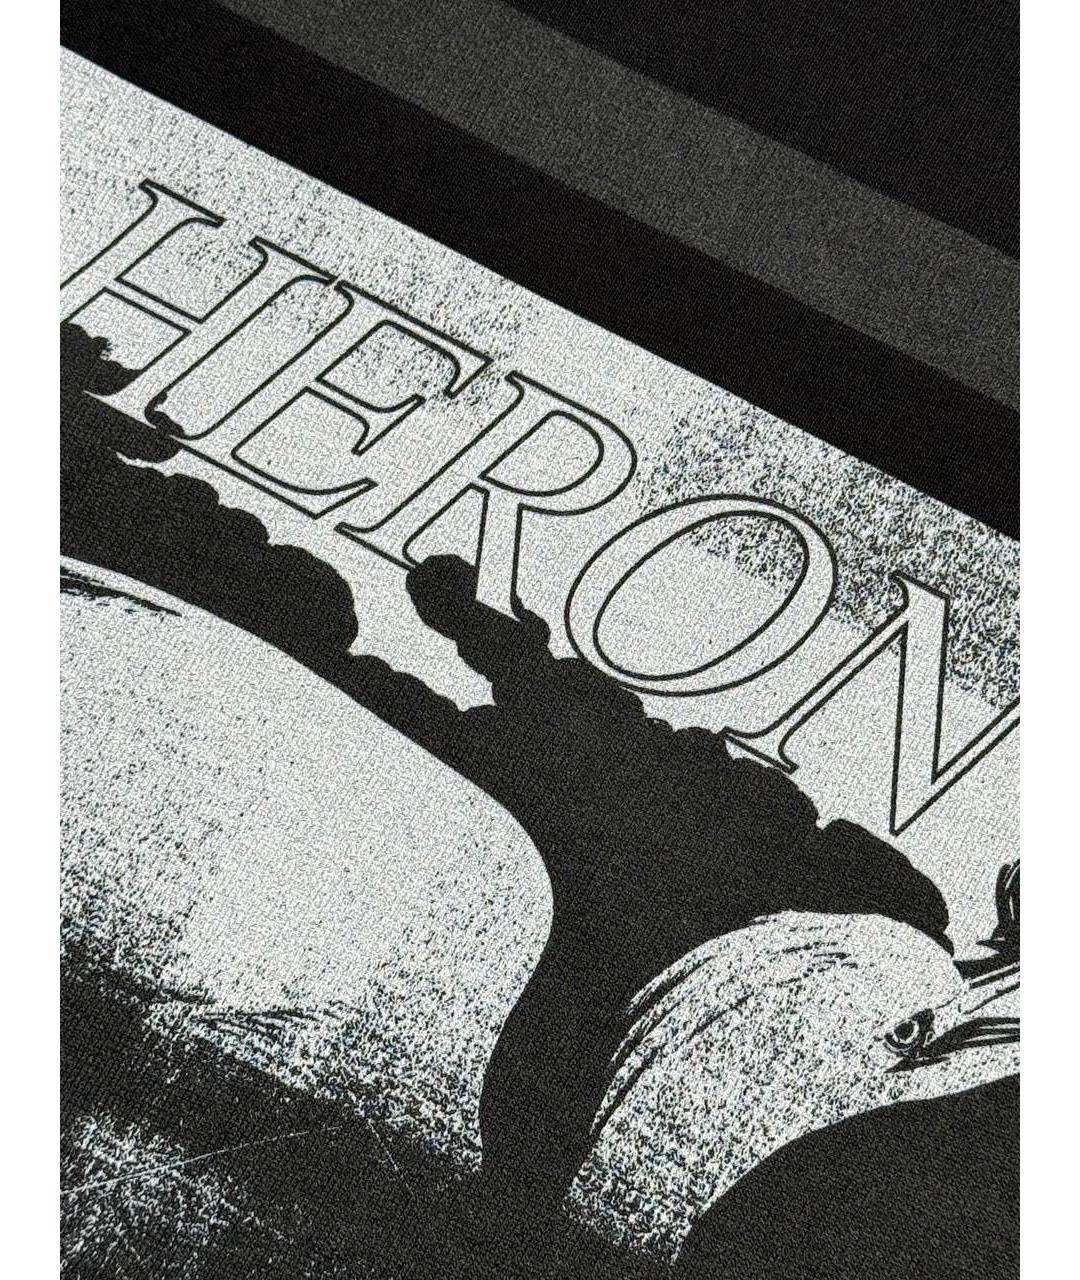 HERON PRESTON Черная хлопковая футболка, фото 4